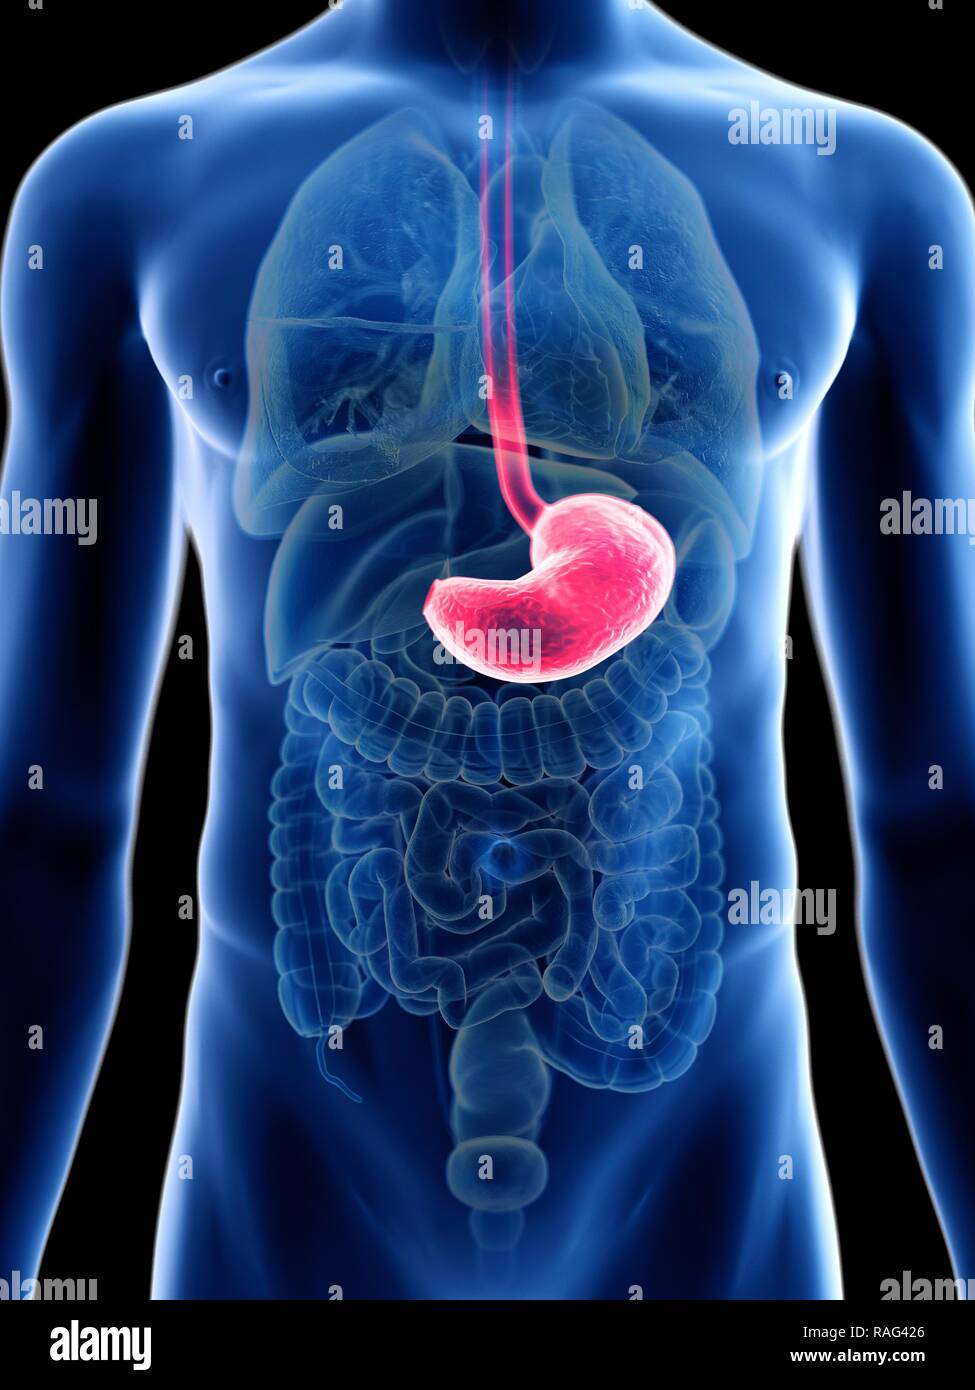 Illustration of a man's stomach Stock Photo - Alamy